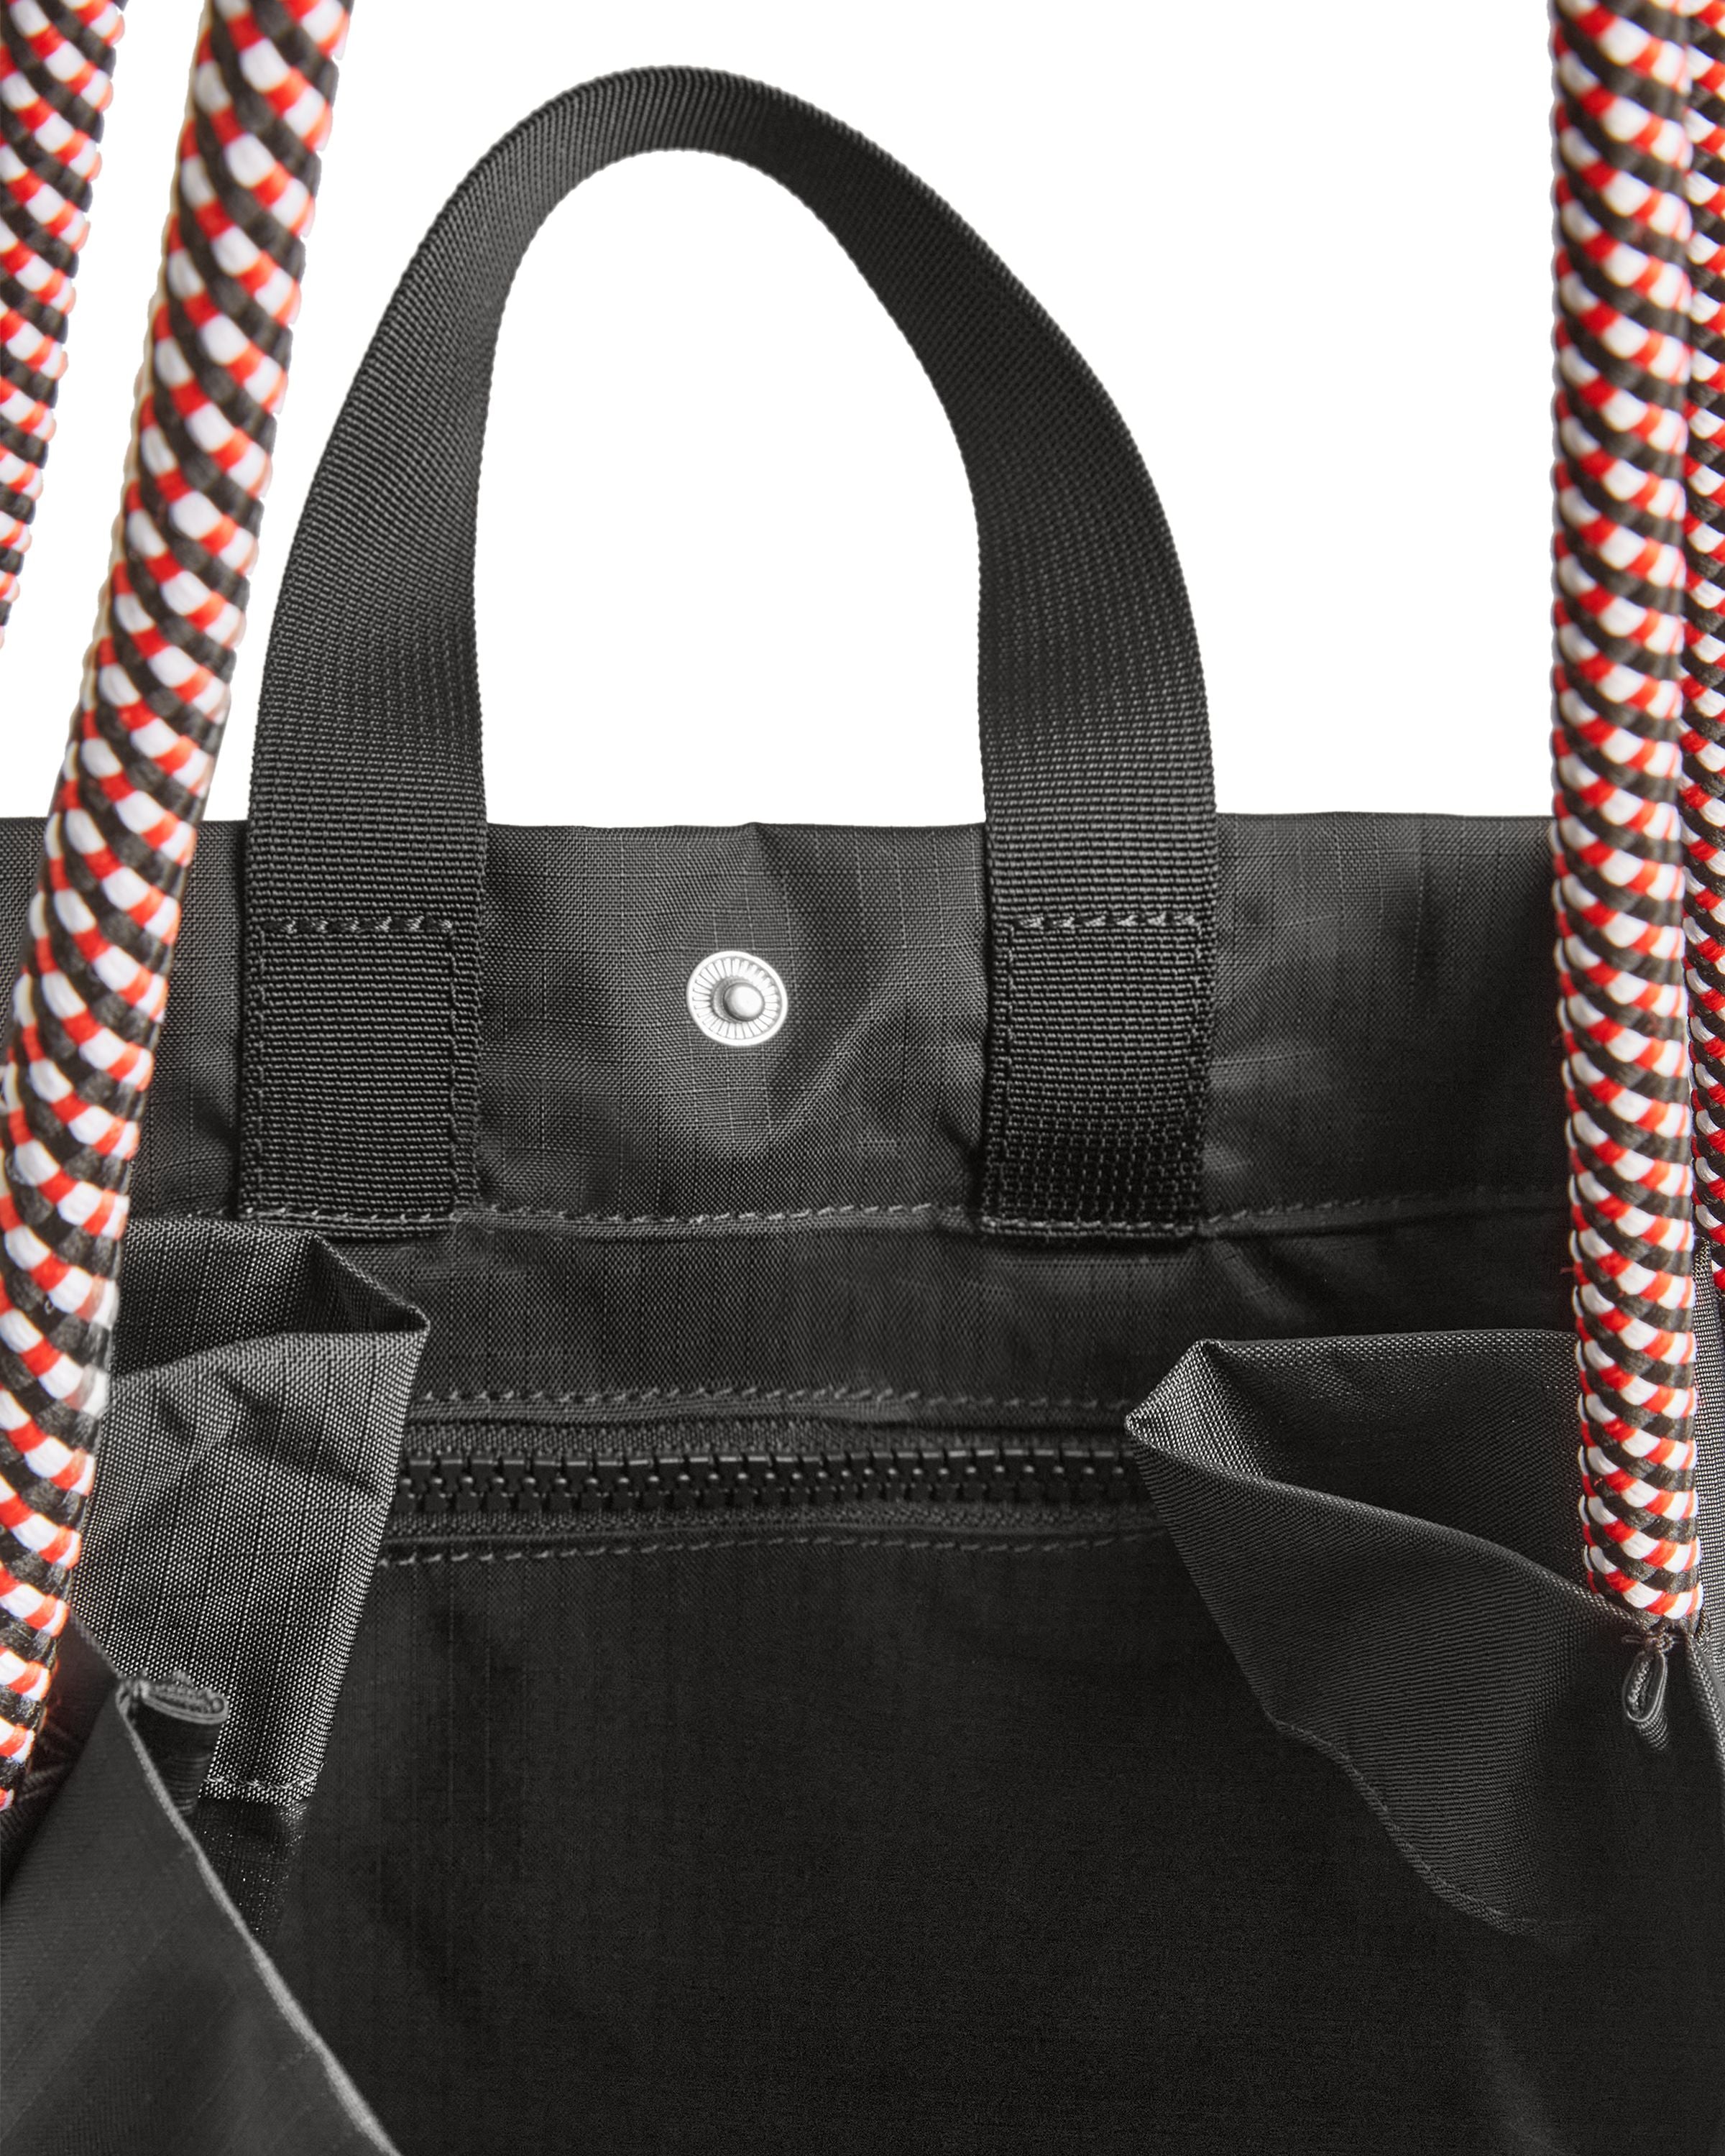 Travel Ripstop Recycled Nylon Tote Bag - Black/Red Box Logo